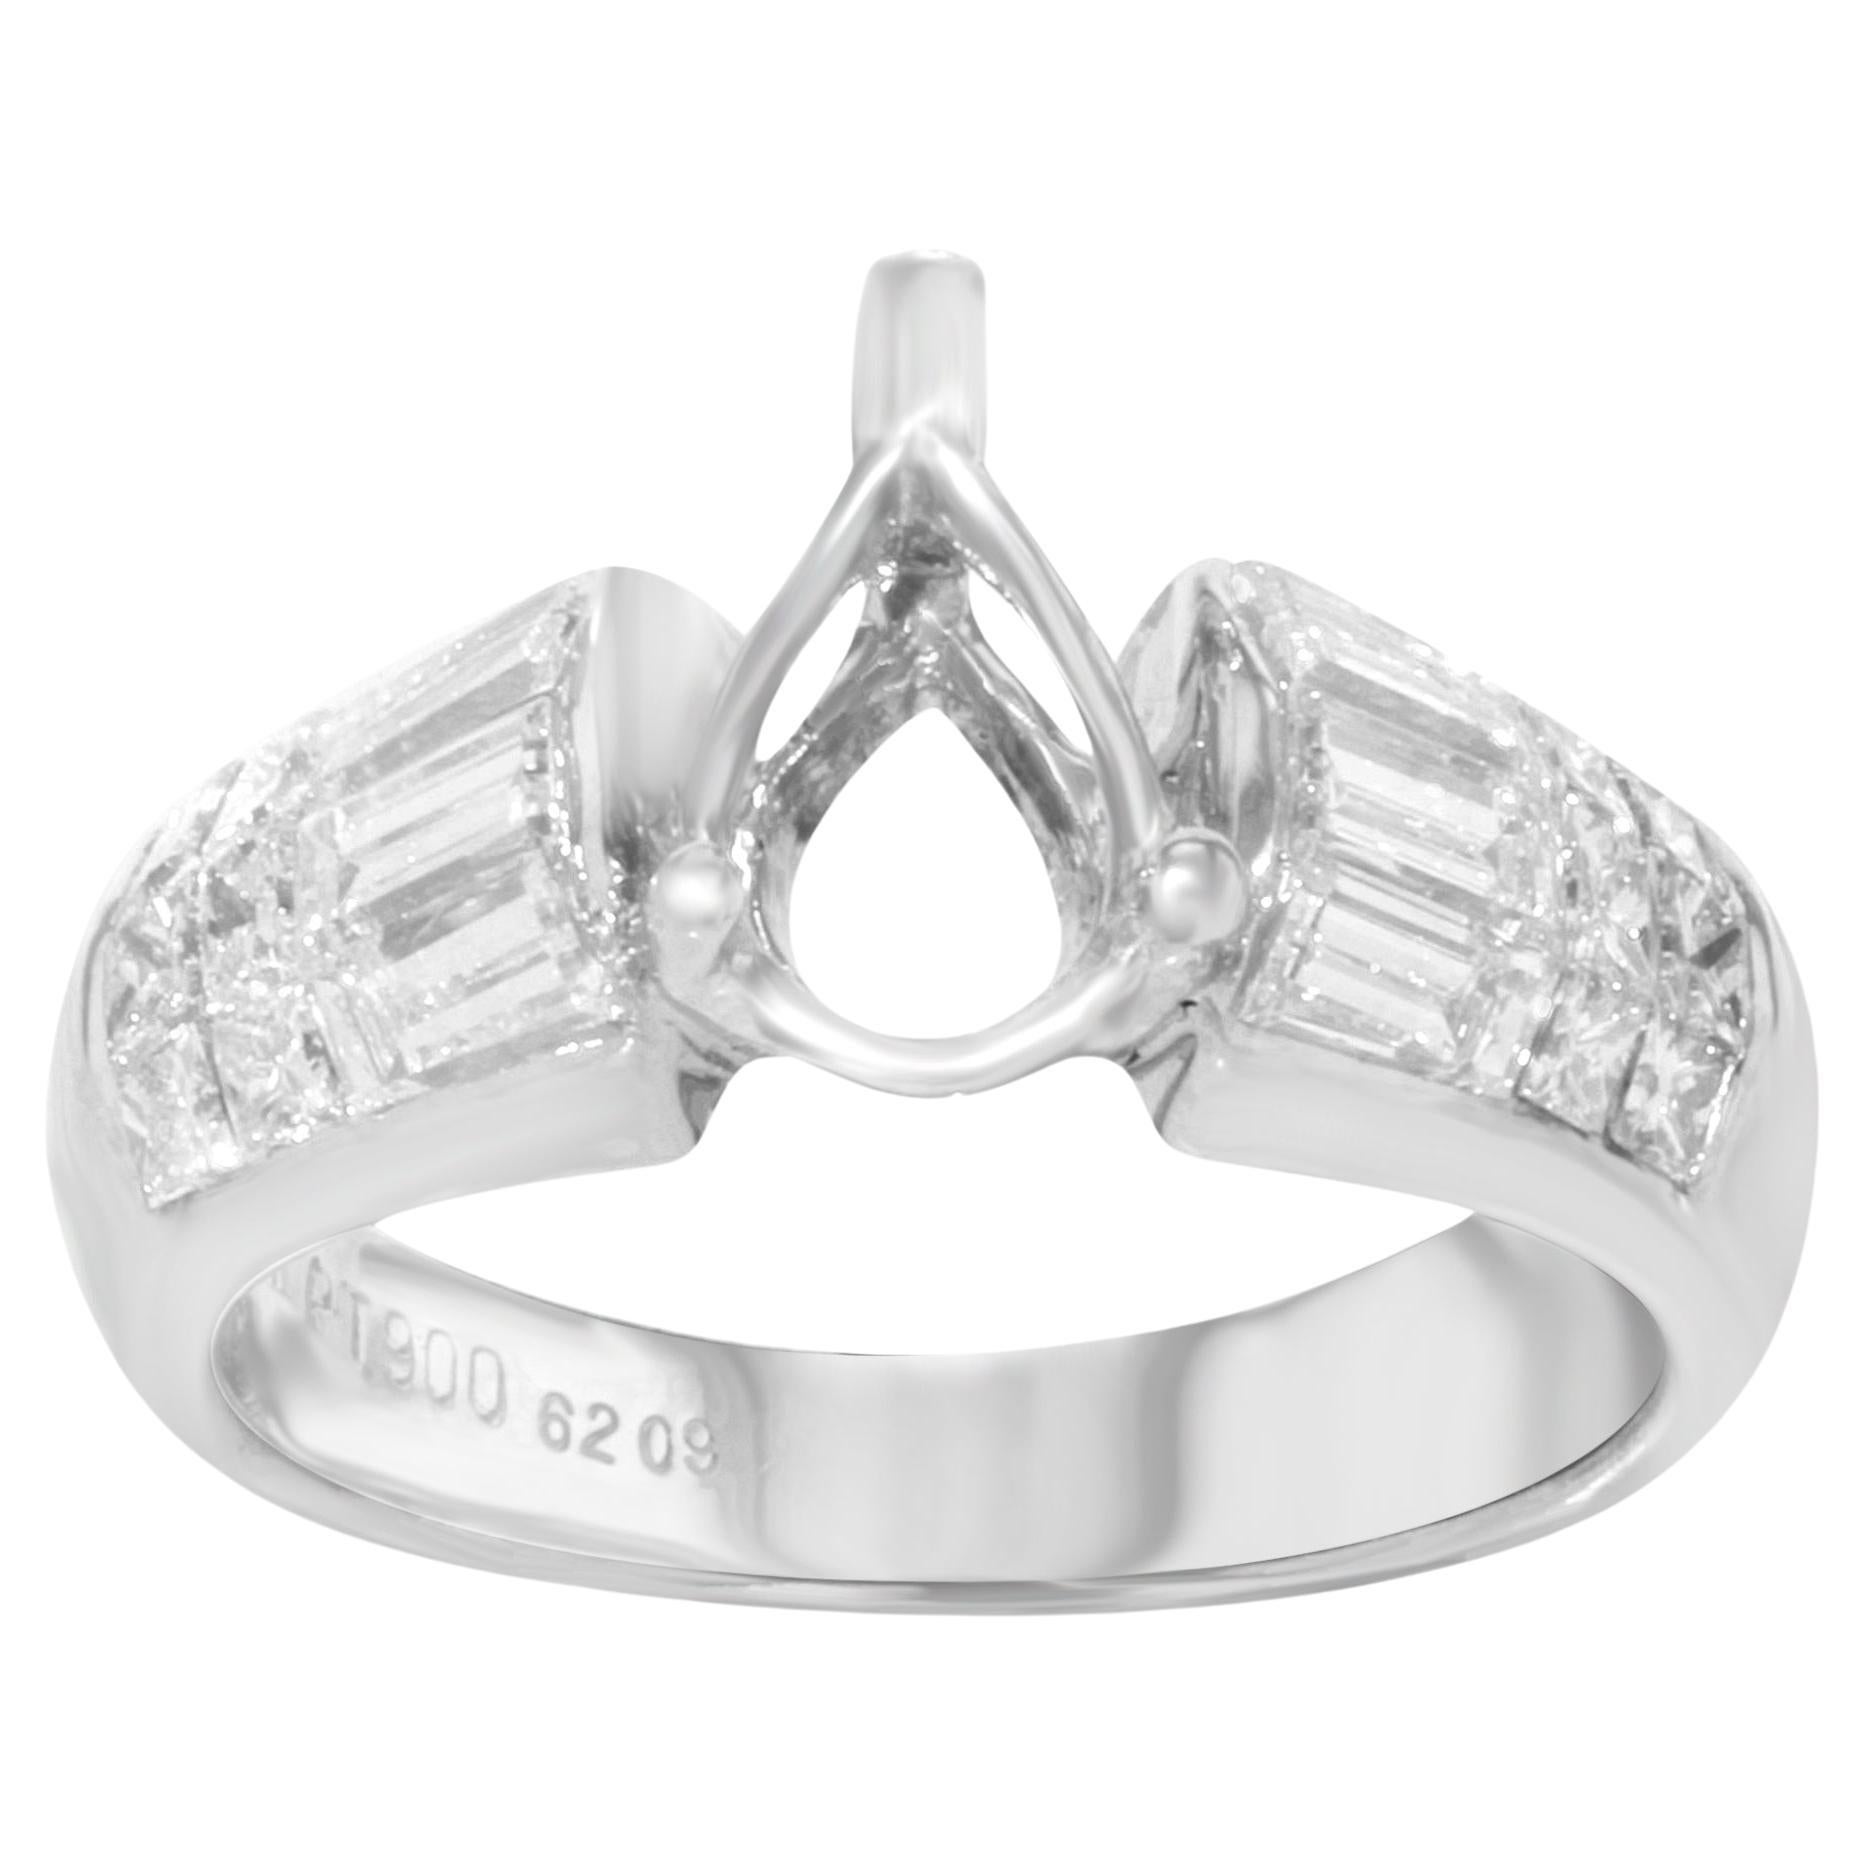 Rachel Koen Diamond Accent Engagement Ring Casting Platinum 1.25 Cttw